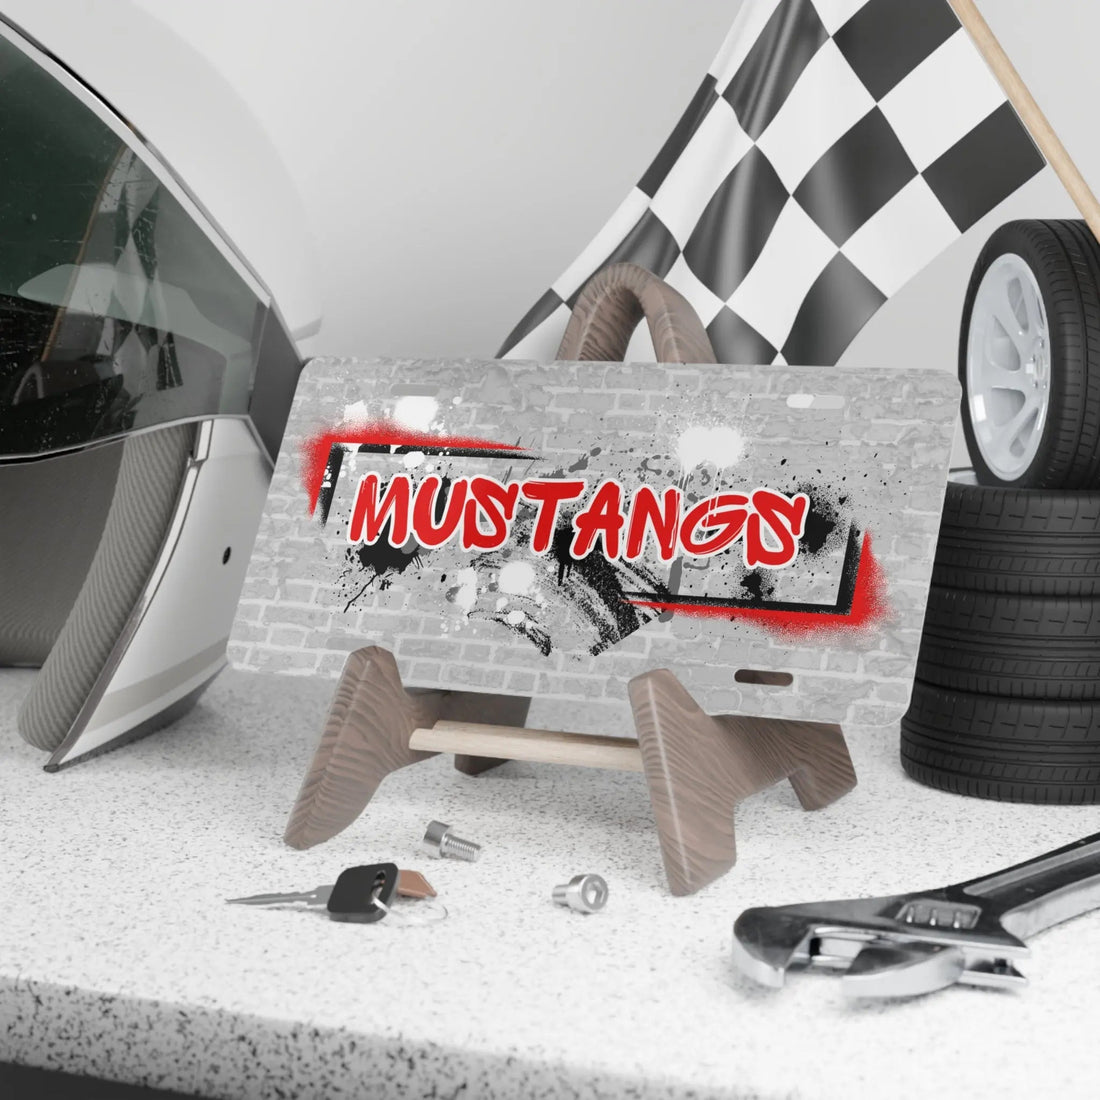 Mustangs Graffiti License Plate - Accessories - Positively Sassy - Mustangs Graffiti License Plate